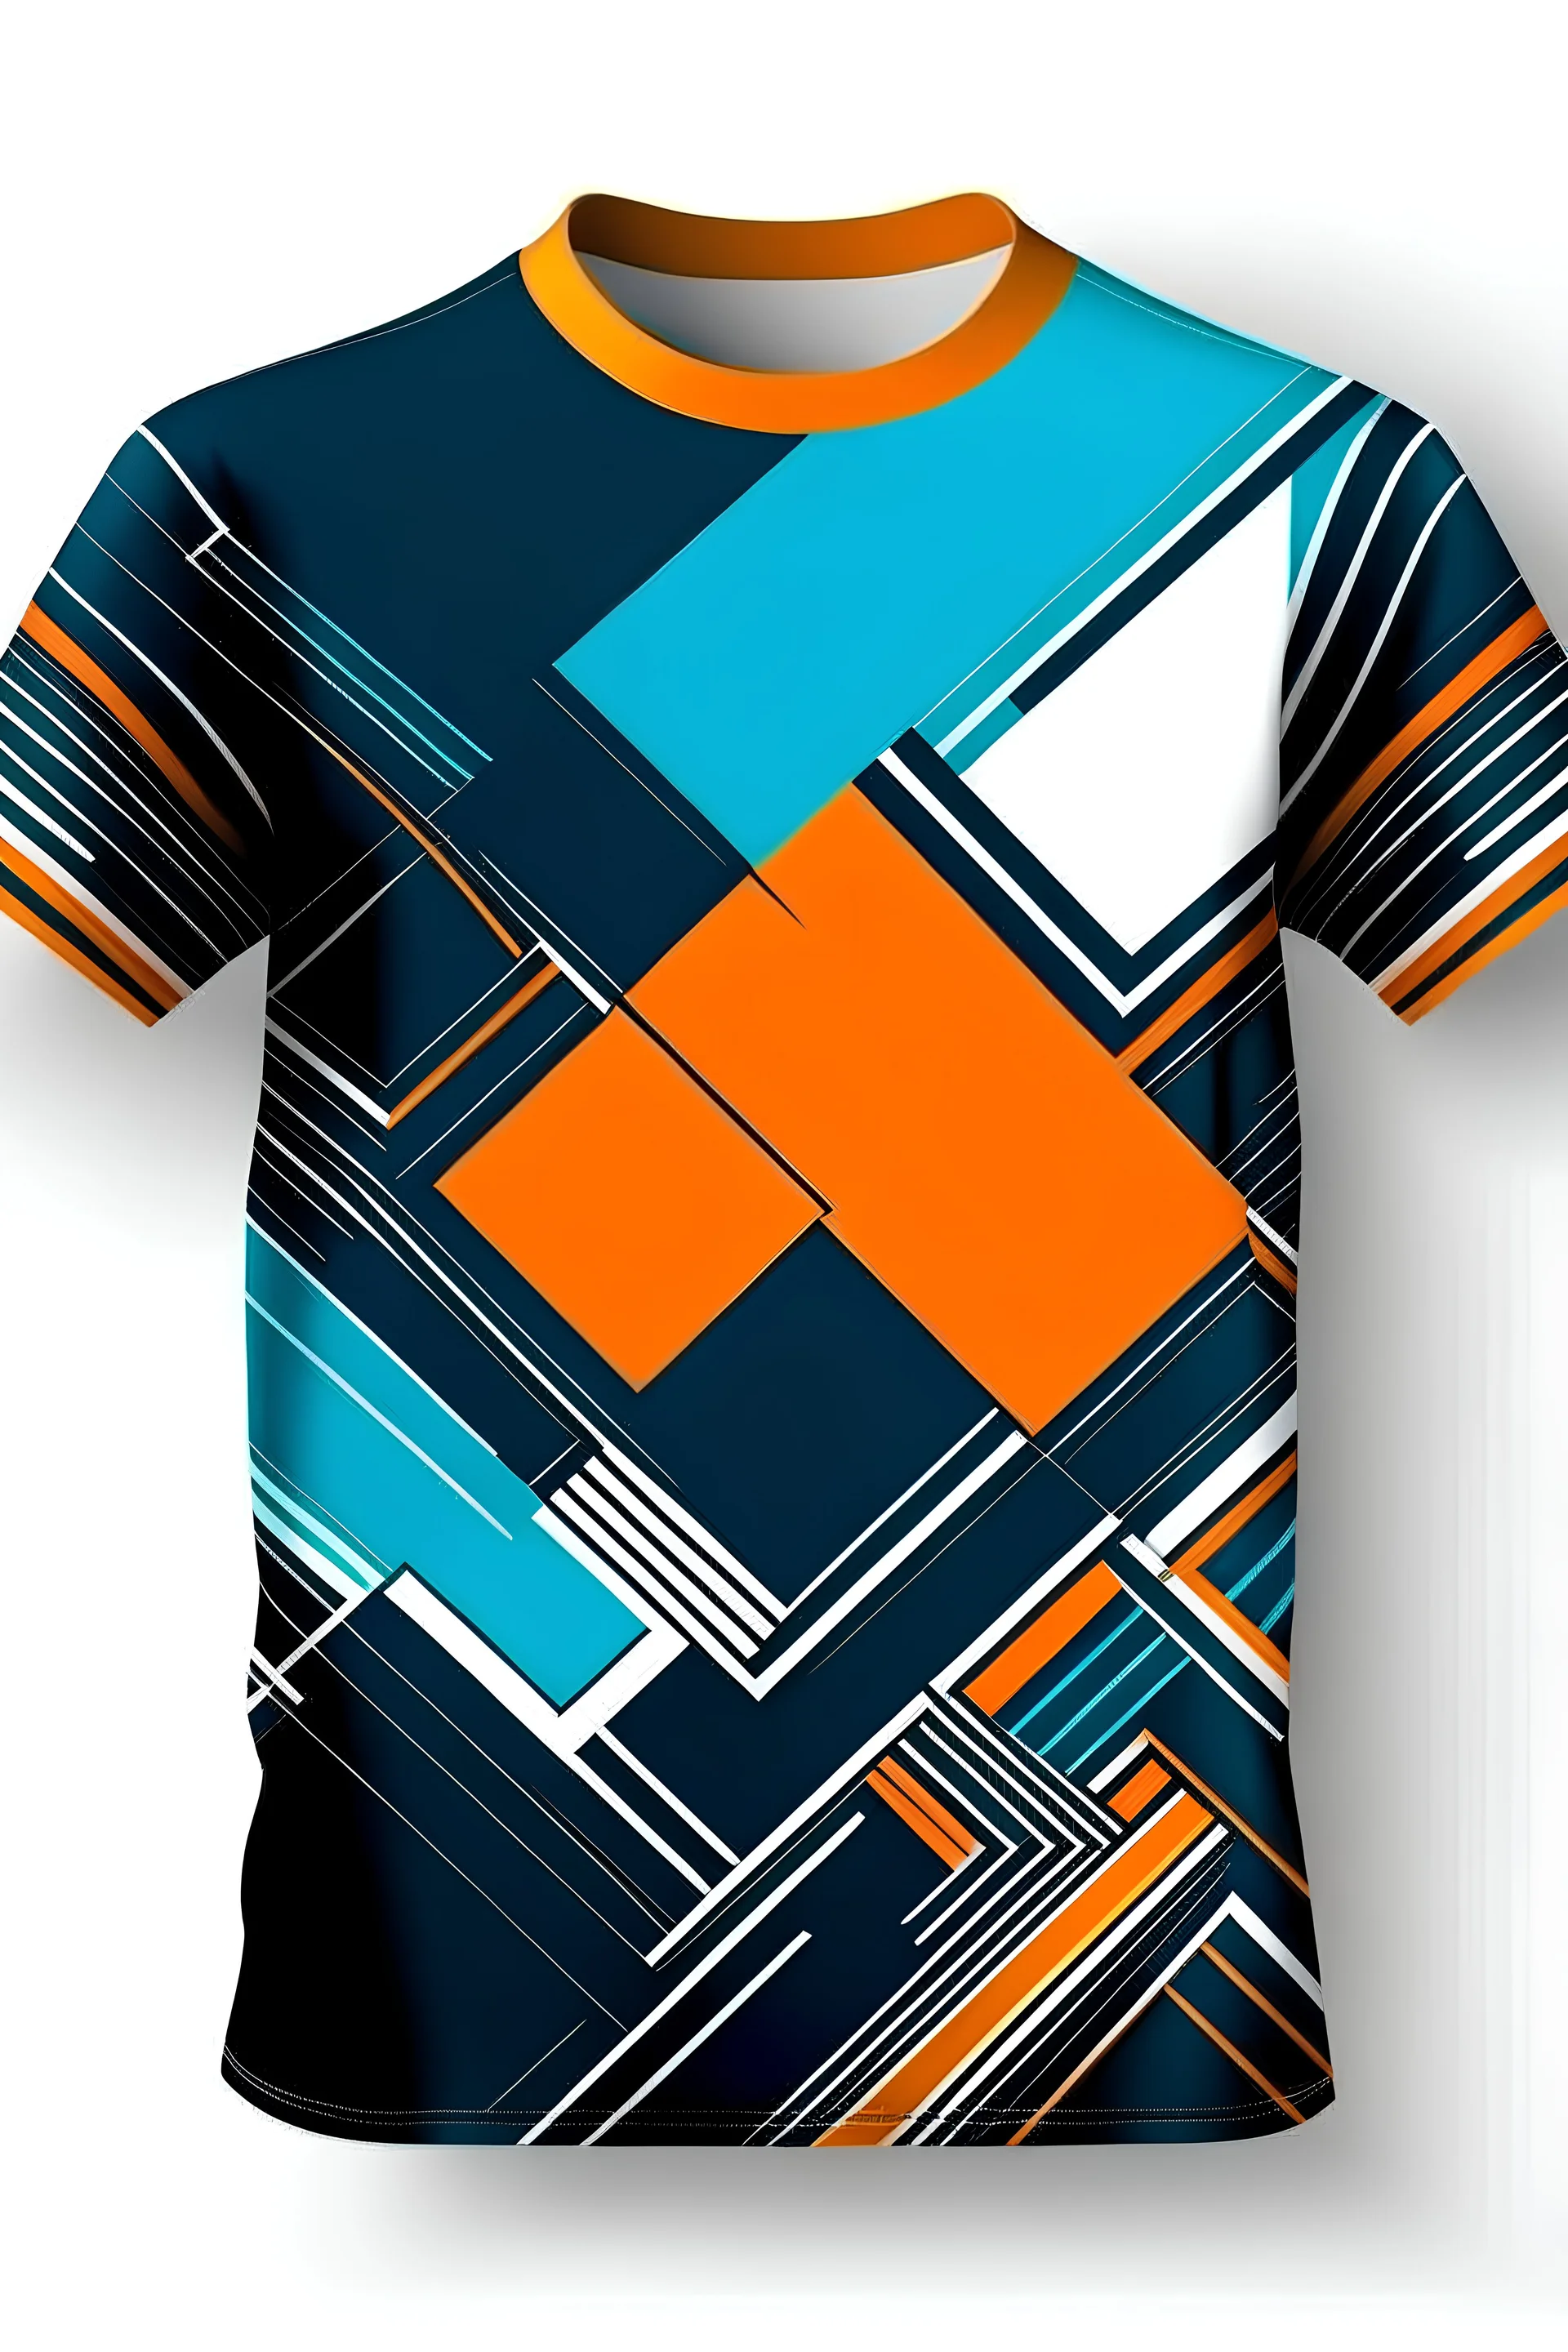 Sport Team Shirt geometric